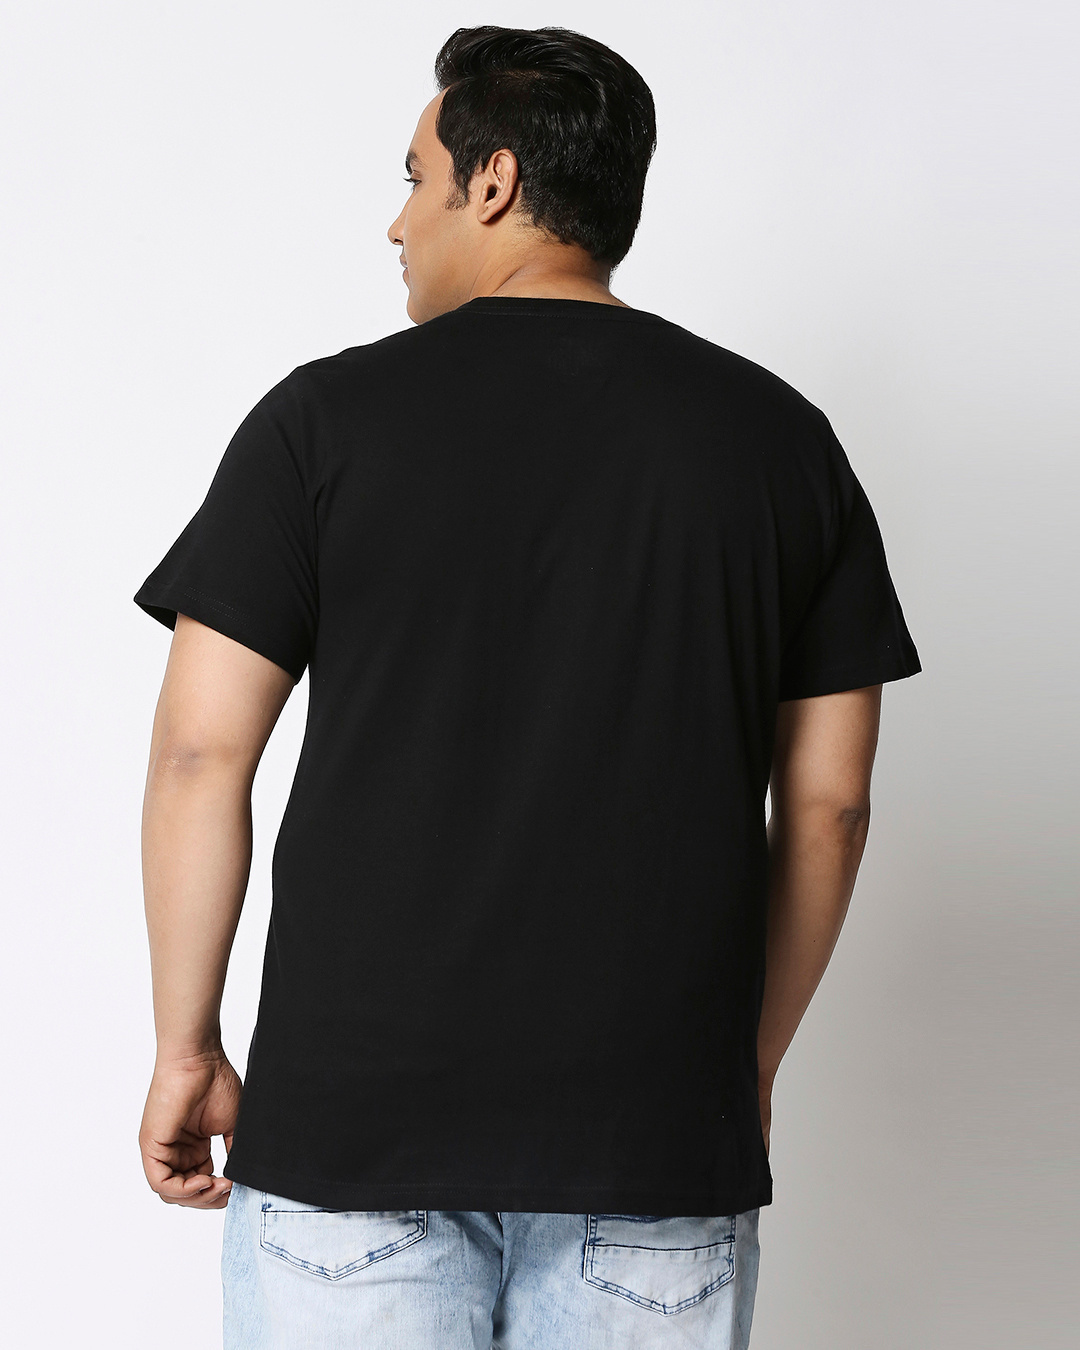 Shop Men's Black Iron Man of War (AVL) Graphic Printed Plus Size T-shirt-Back